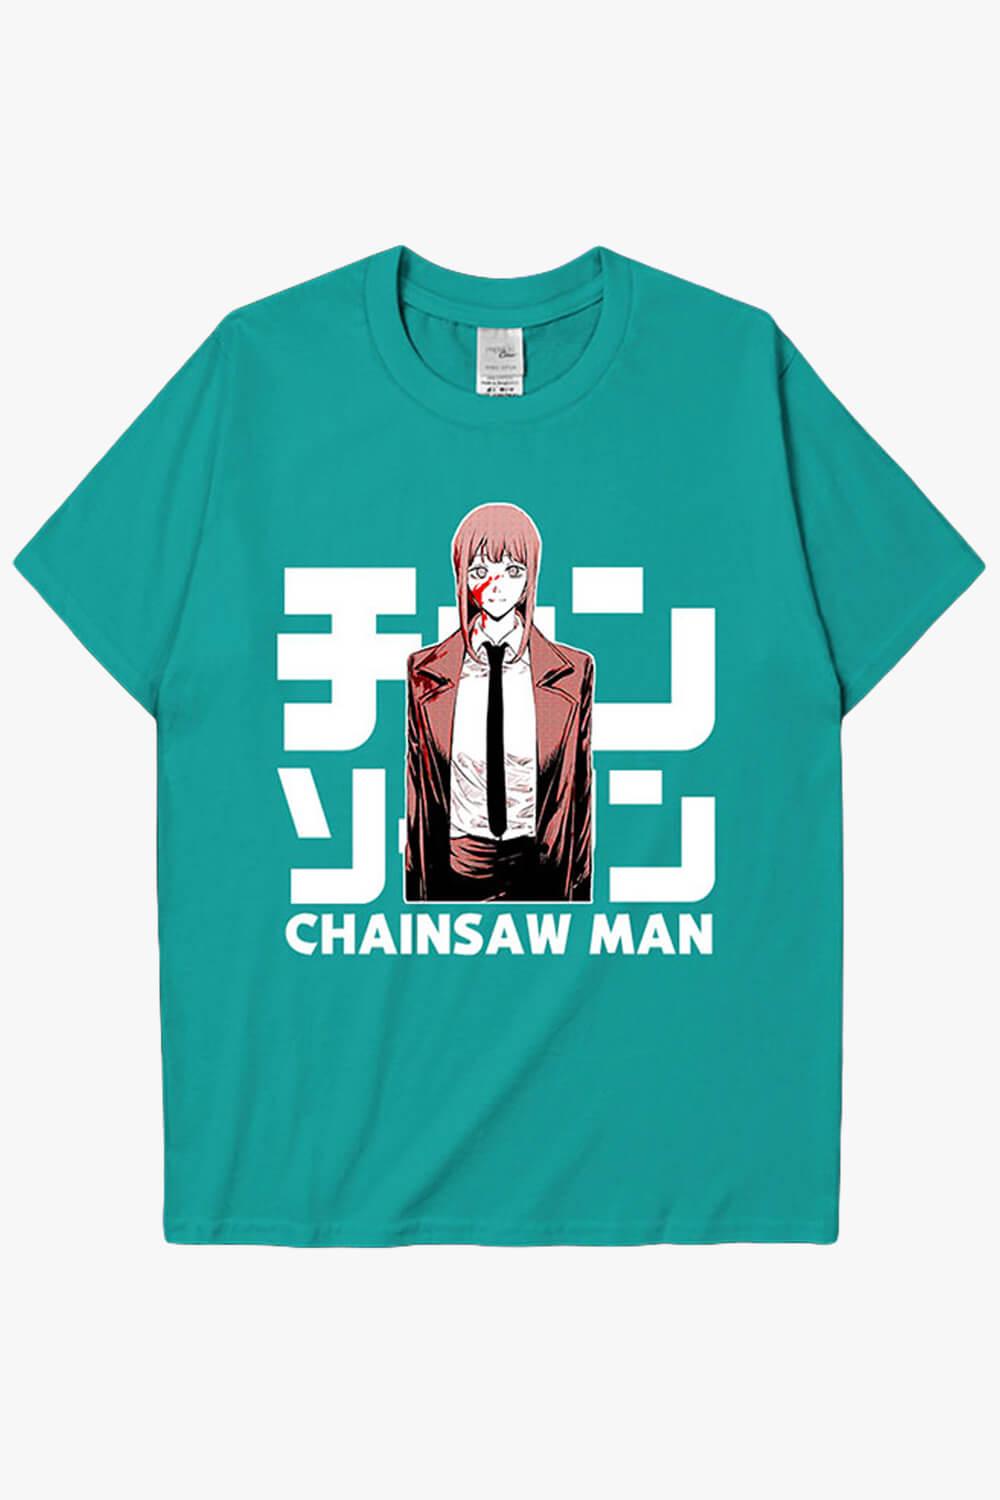 Chainsaw Man Makima T-Shirt Gurokawa - Aesthetic Clothes Shop